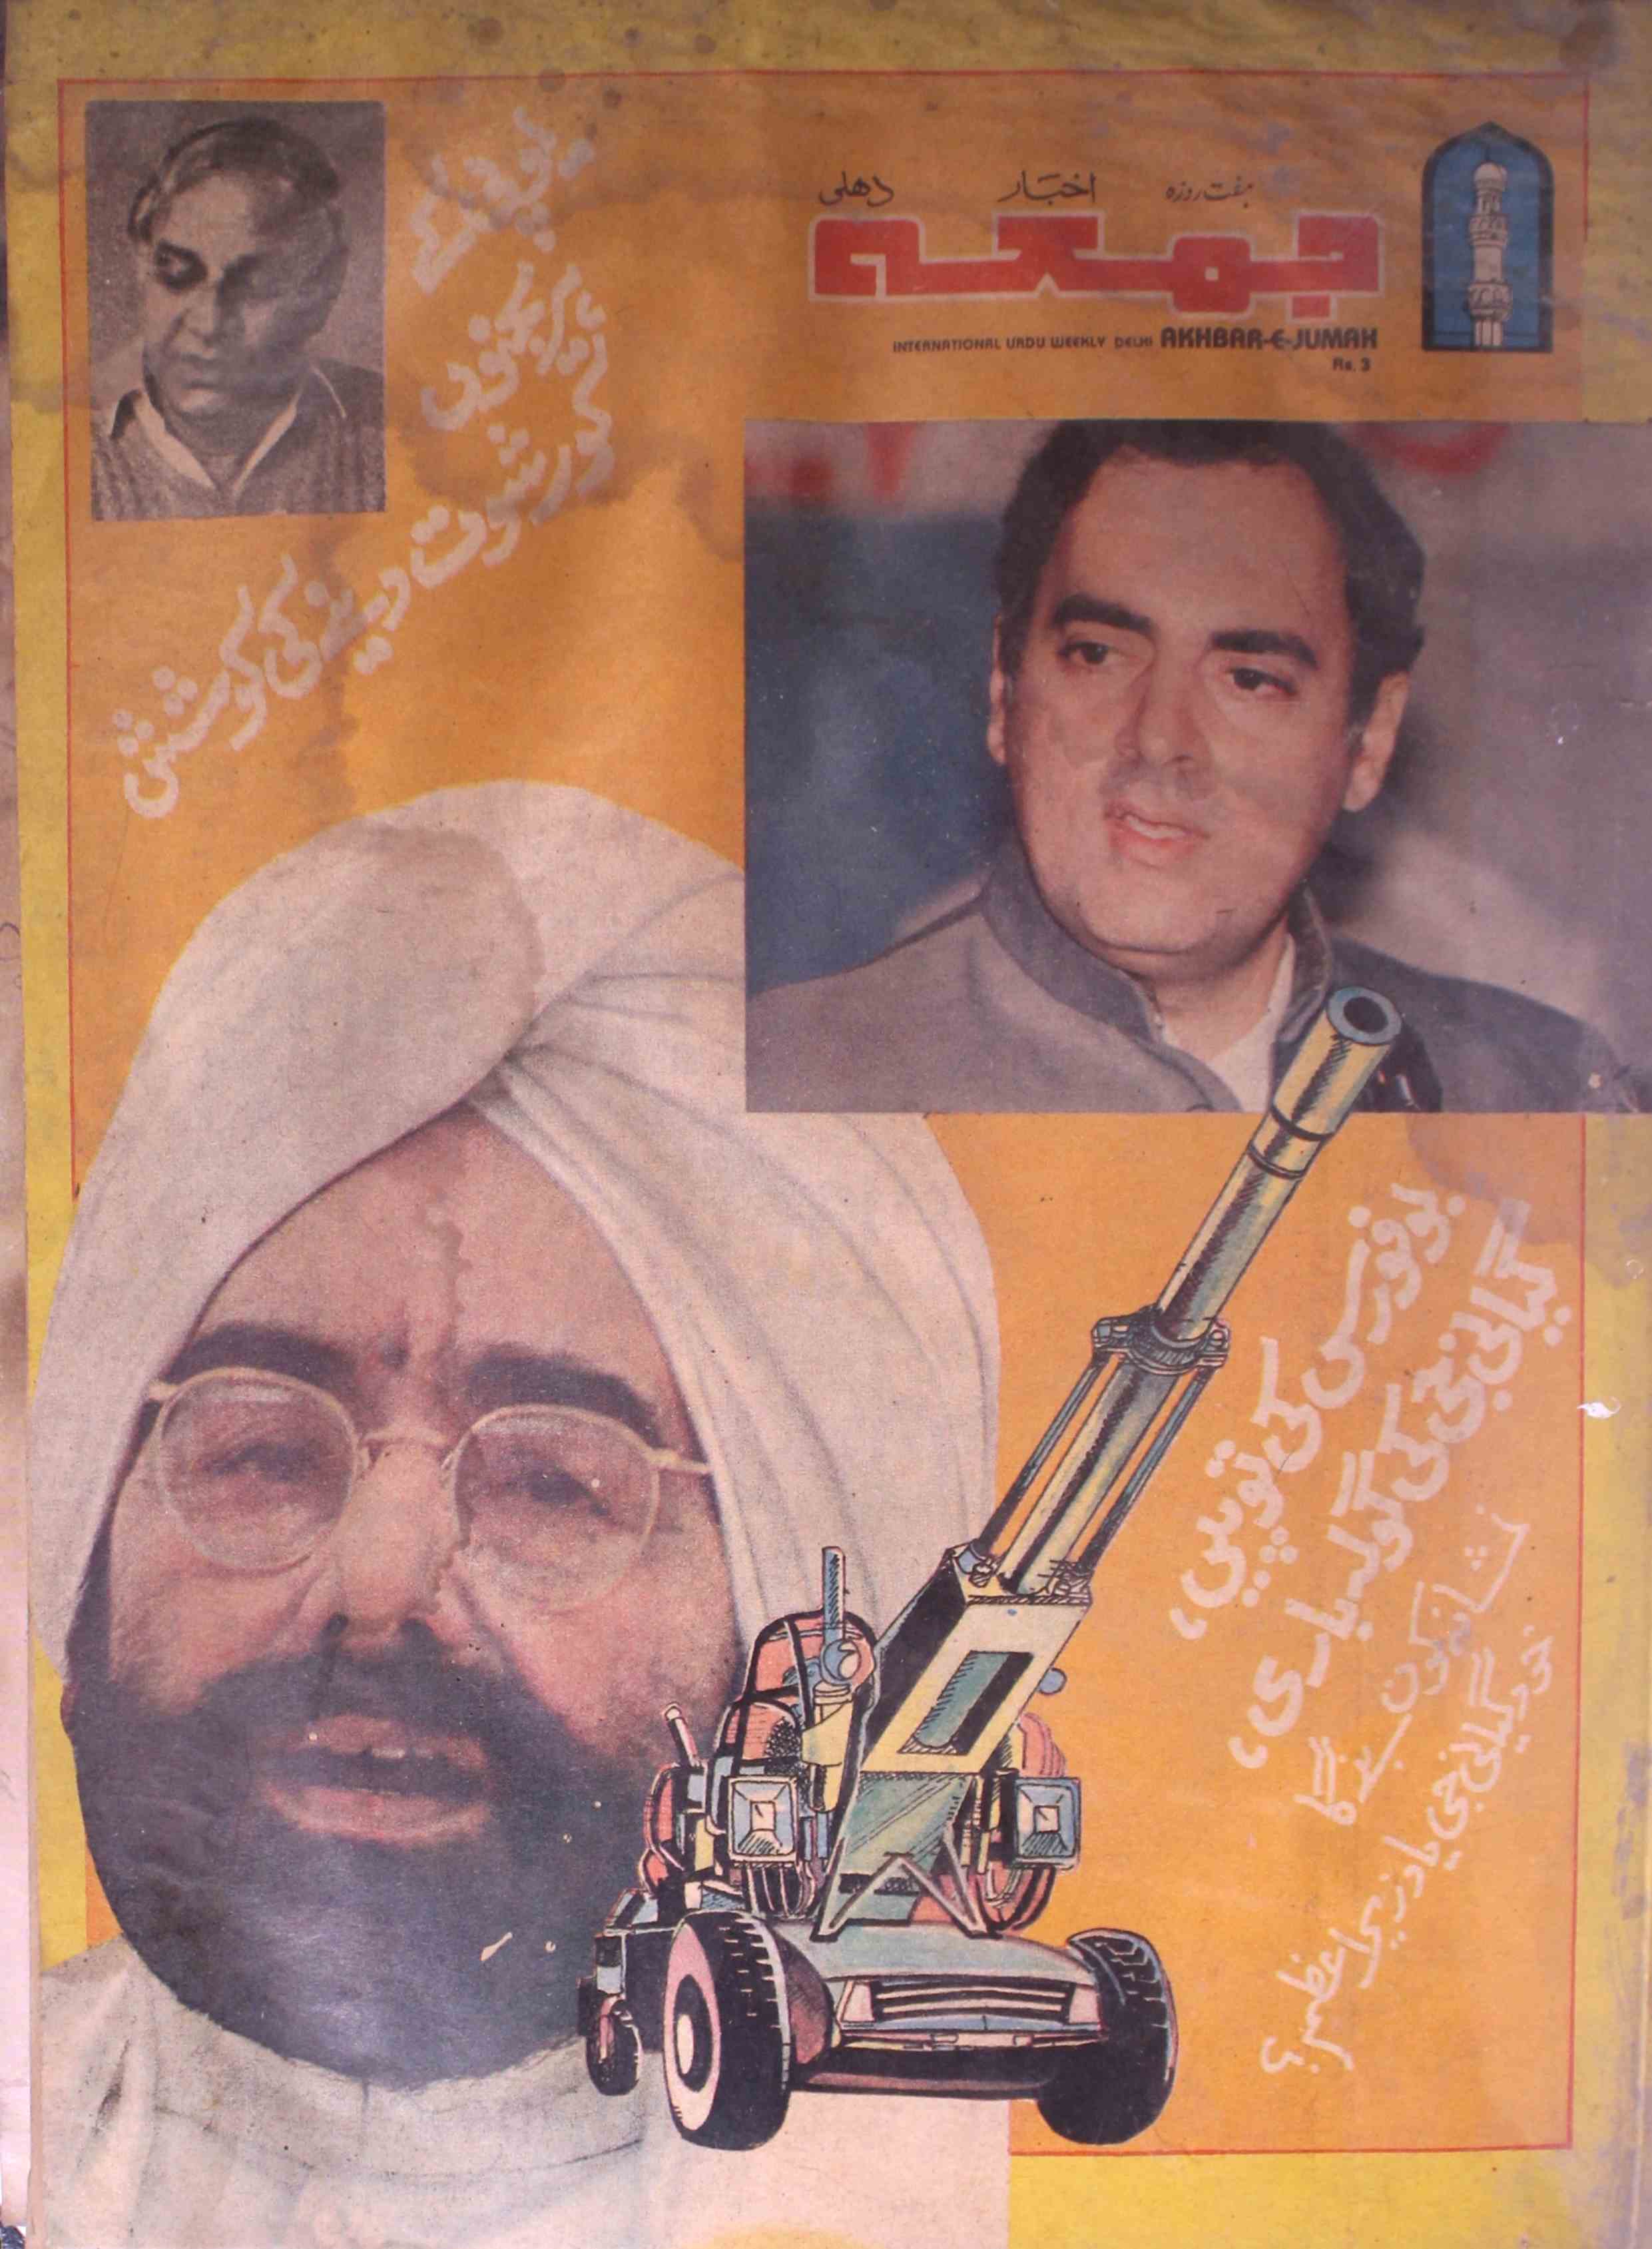 جمعہ- Magazine by عرفان احمد 